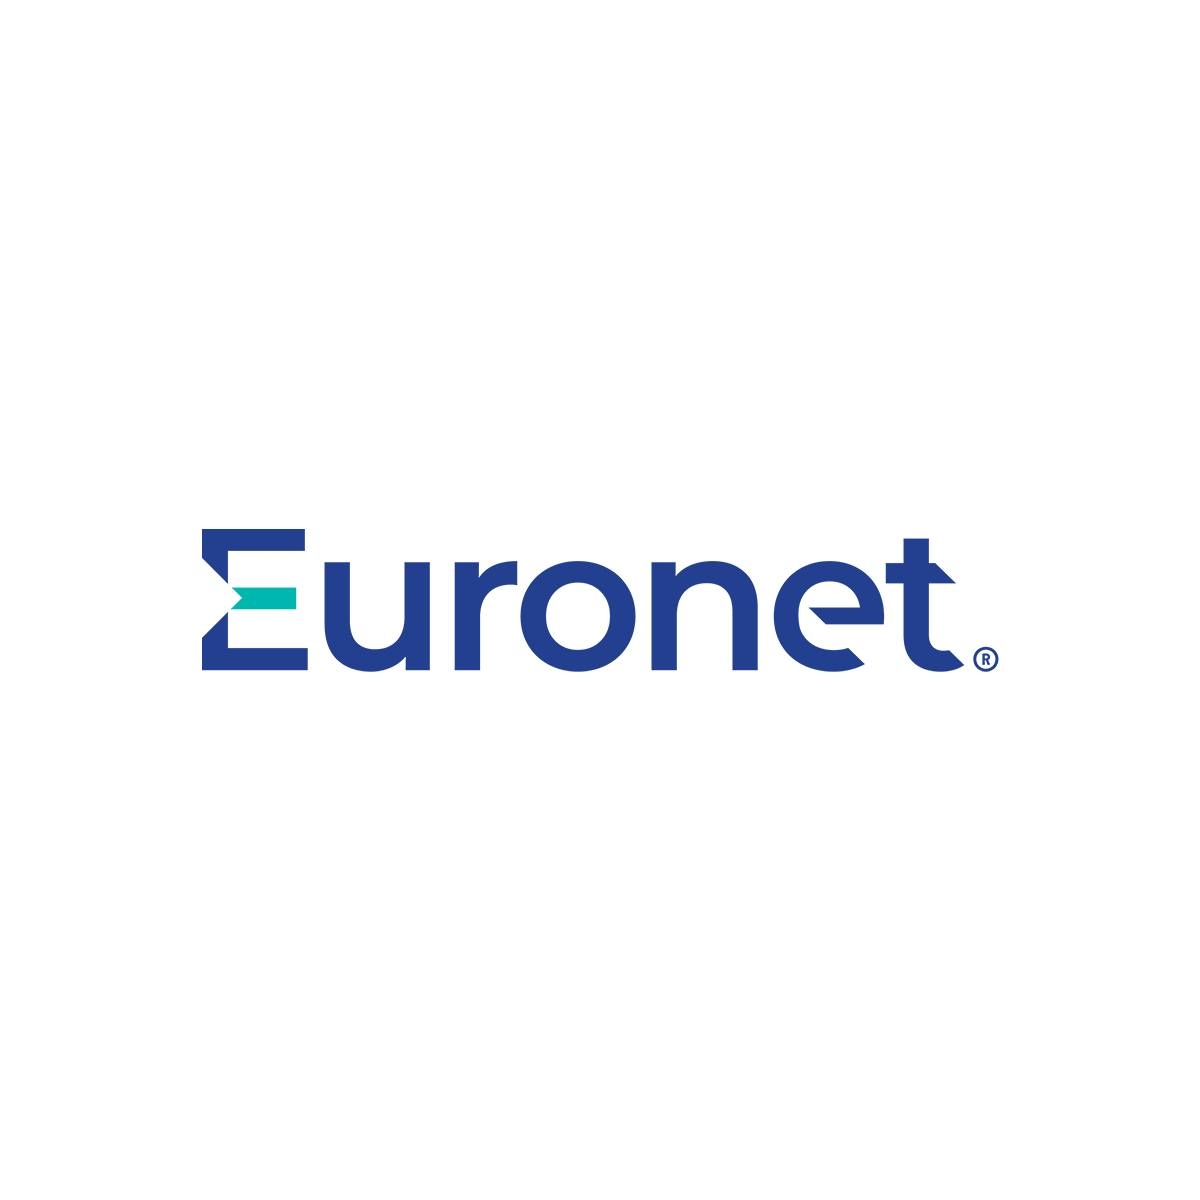 euronet